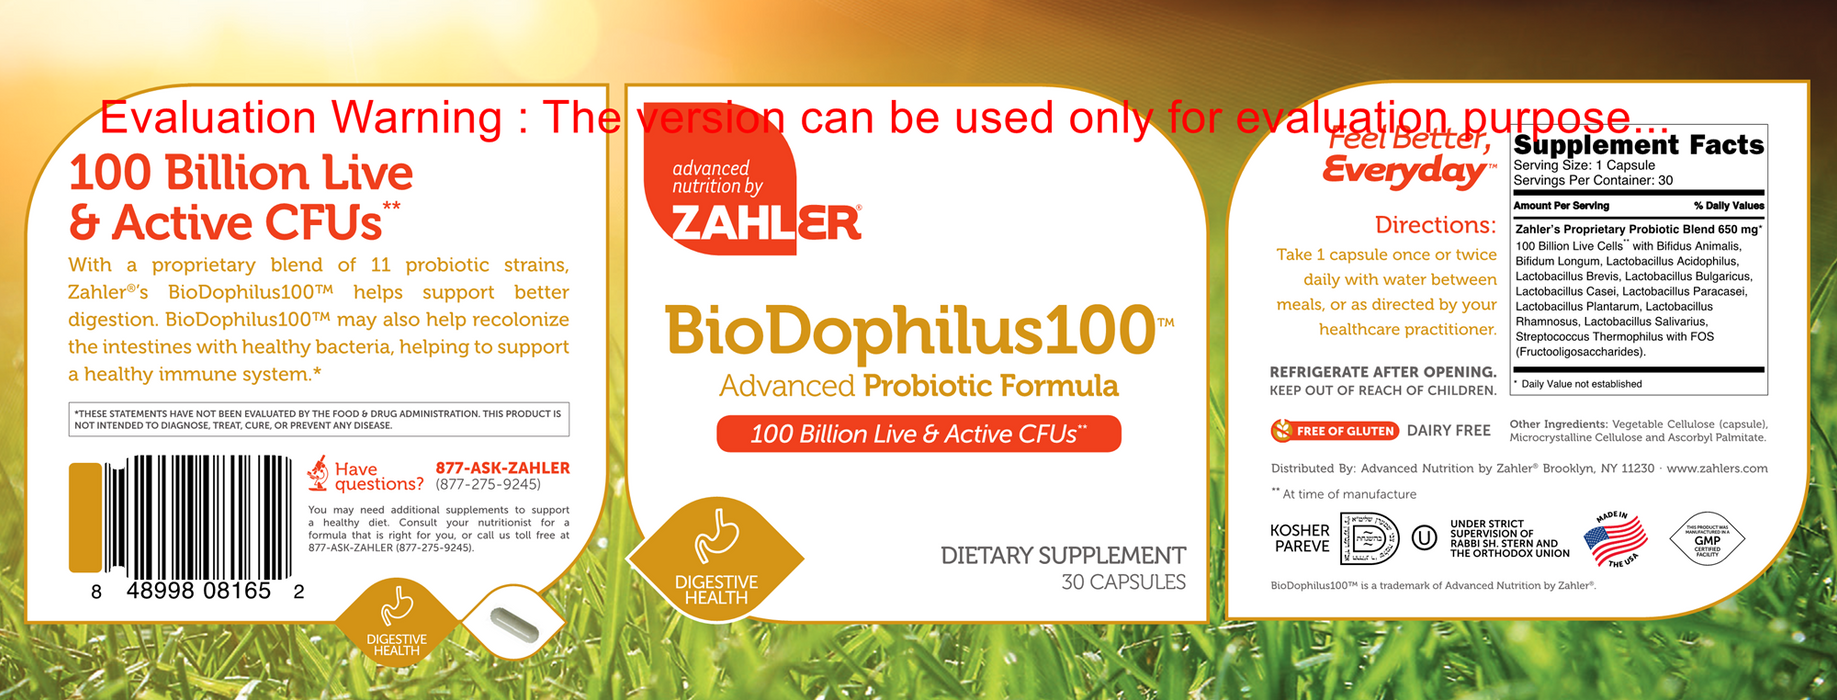 Advanced Nutrition by Zahler BioDophilus 100B 30 caps